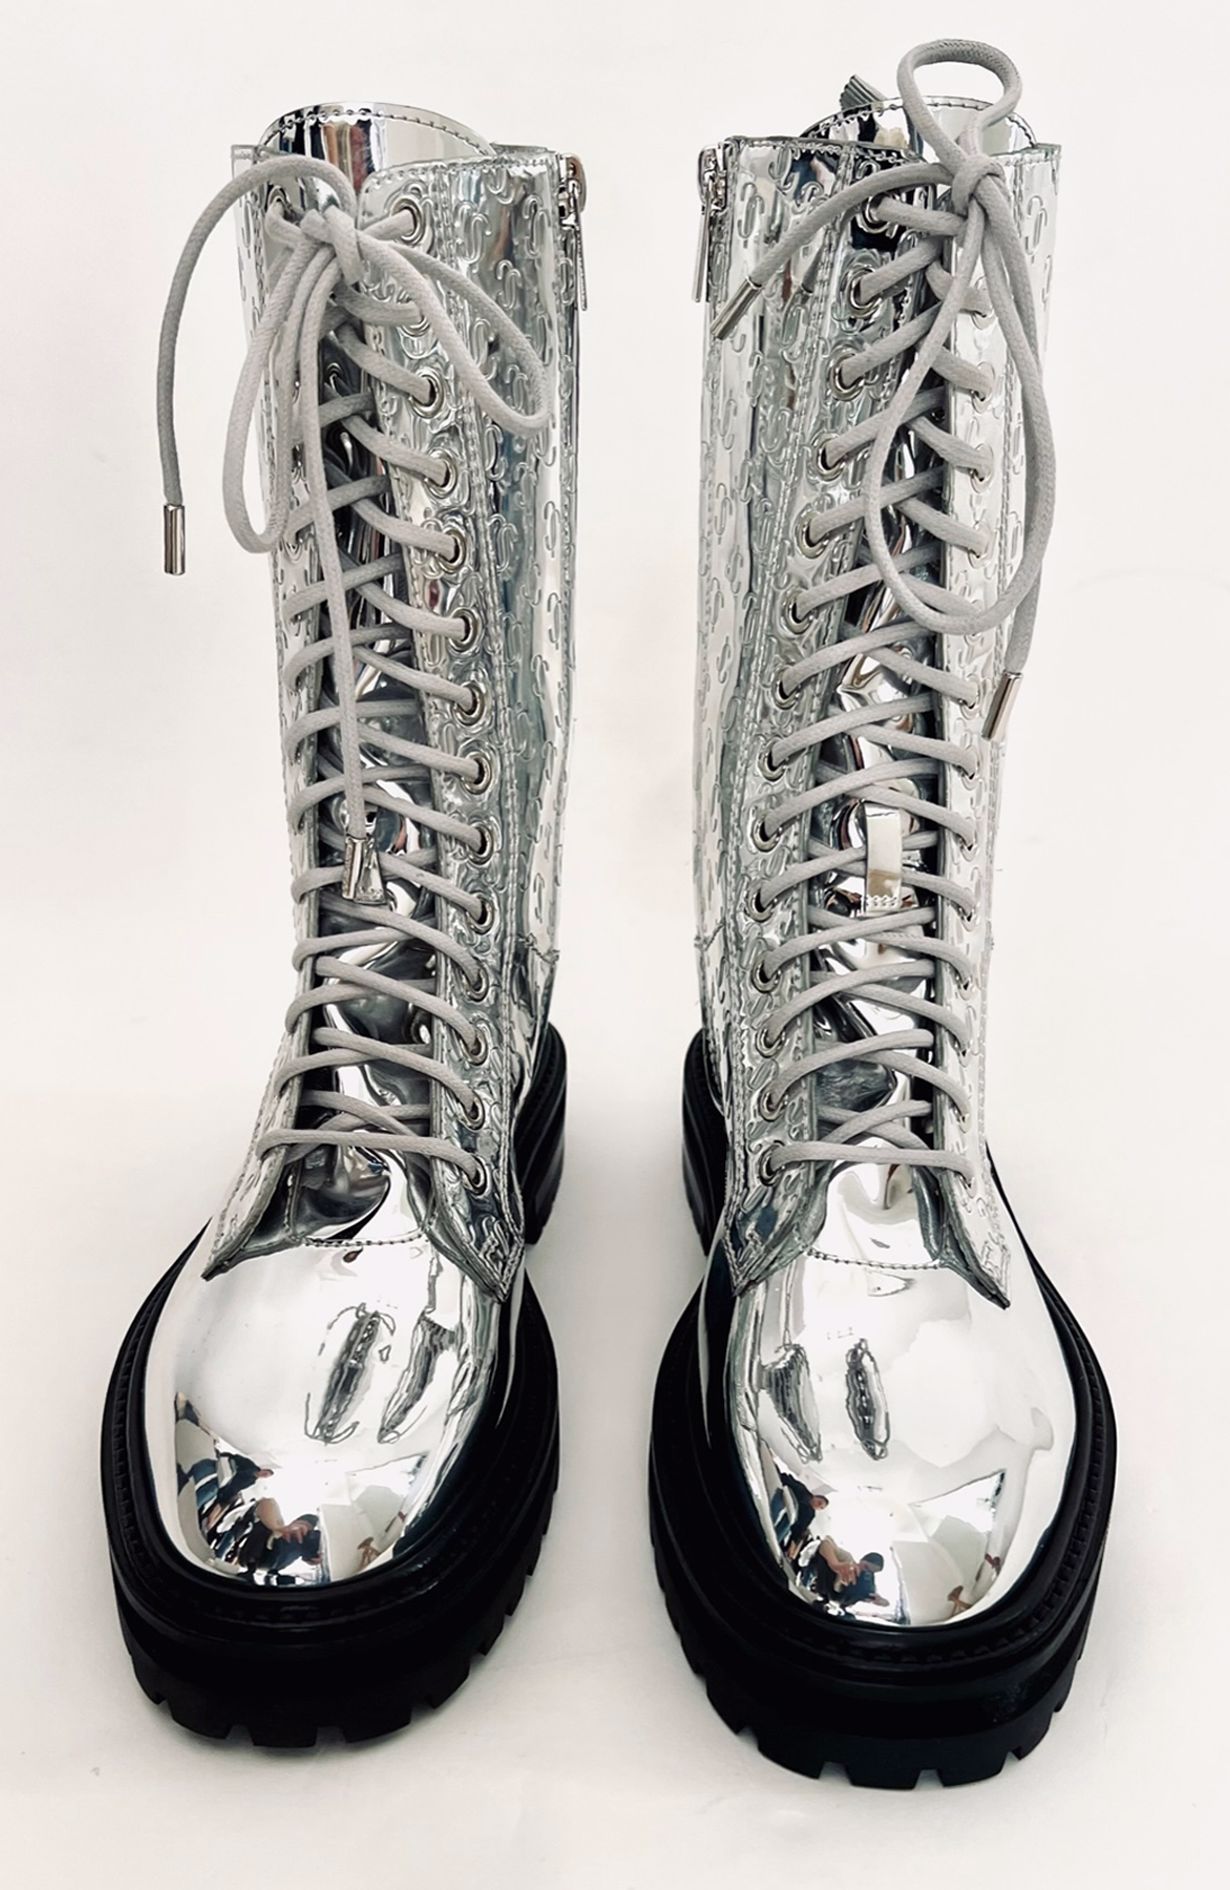 Jimmy Choo Silver Boots - Size 38 + Box